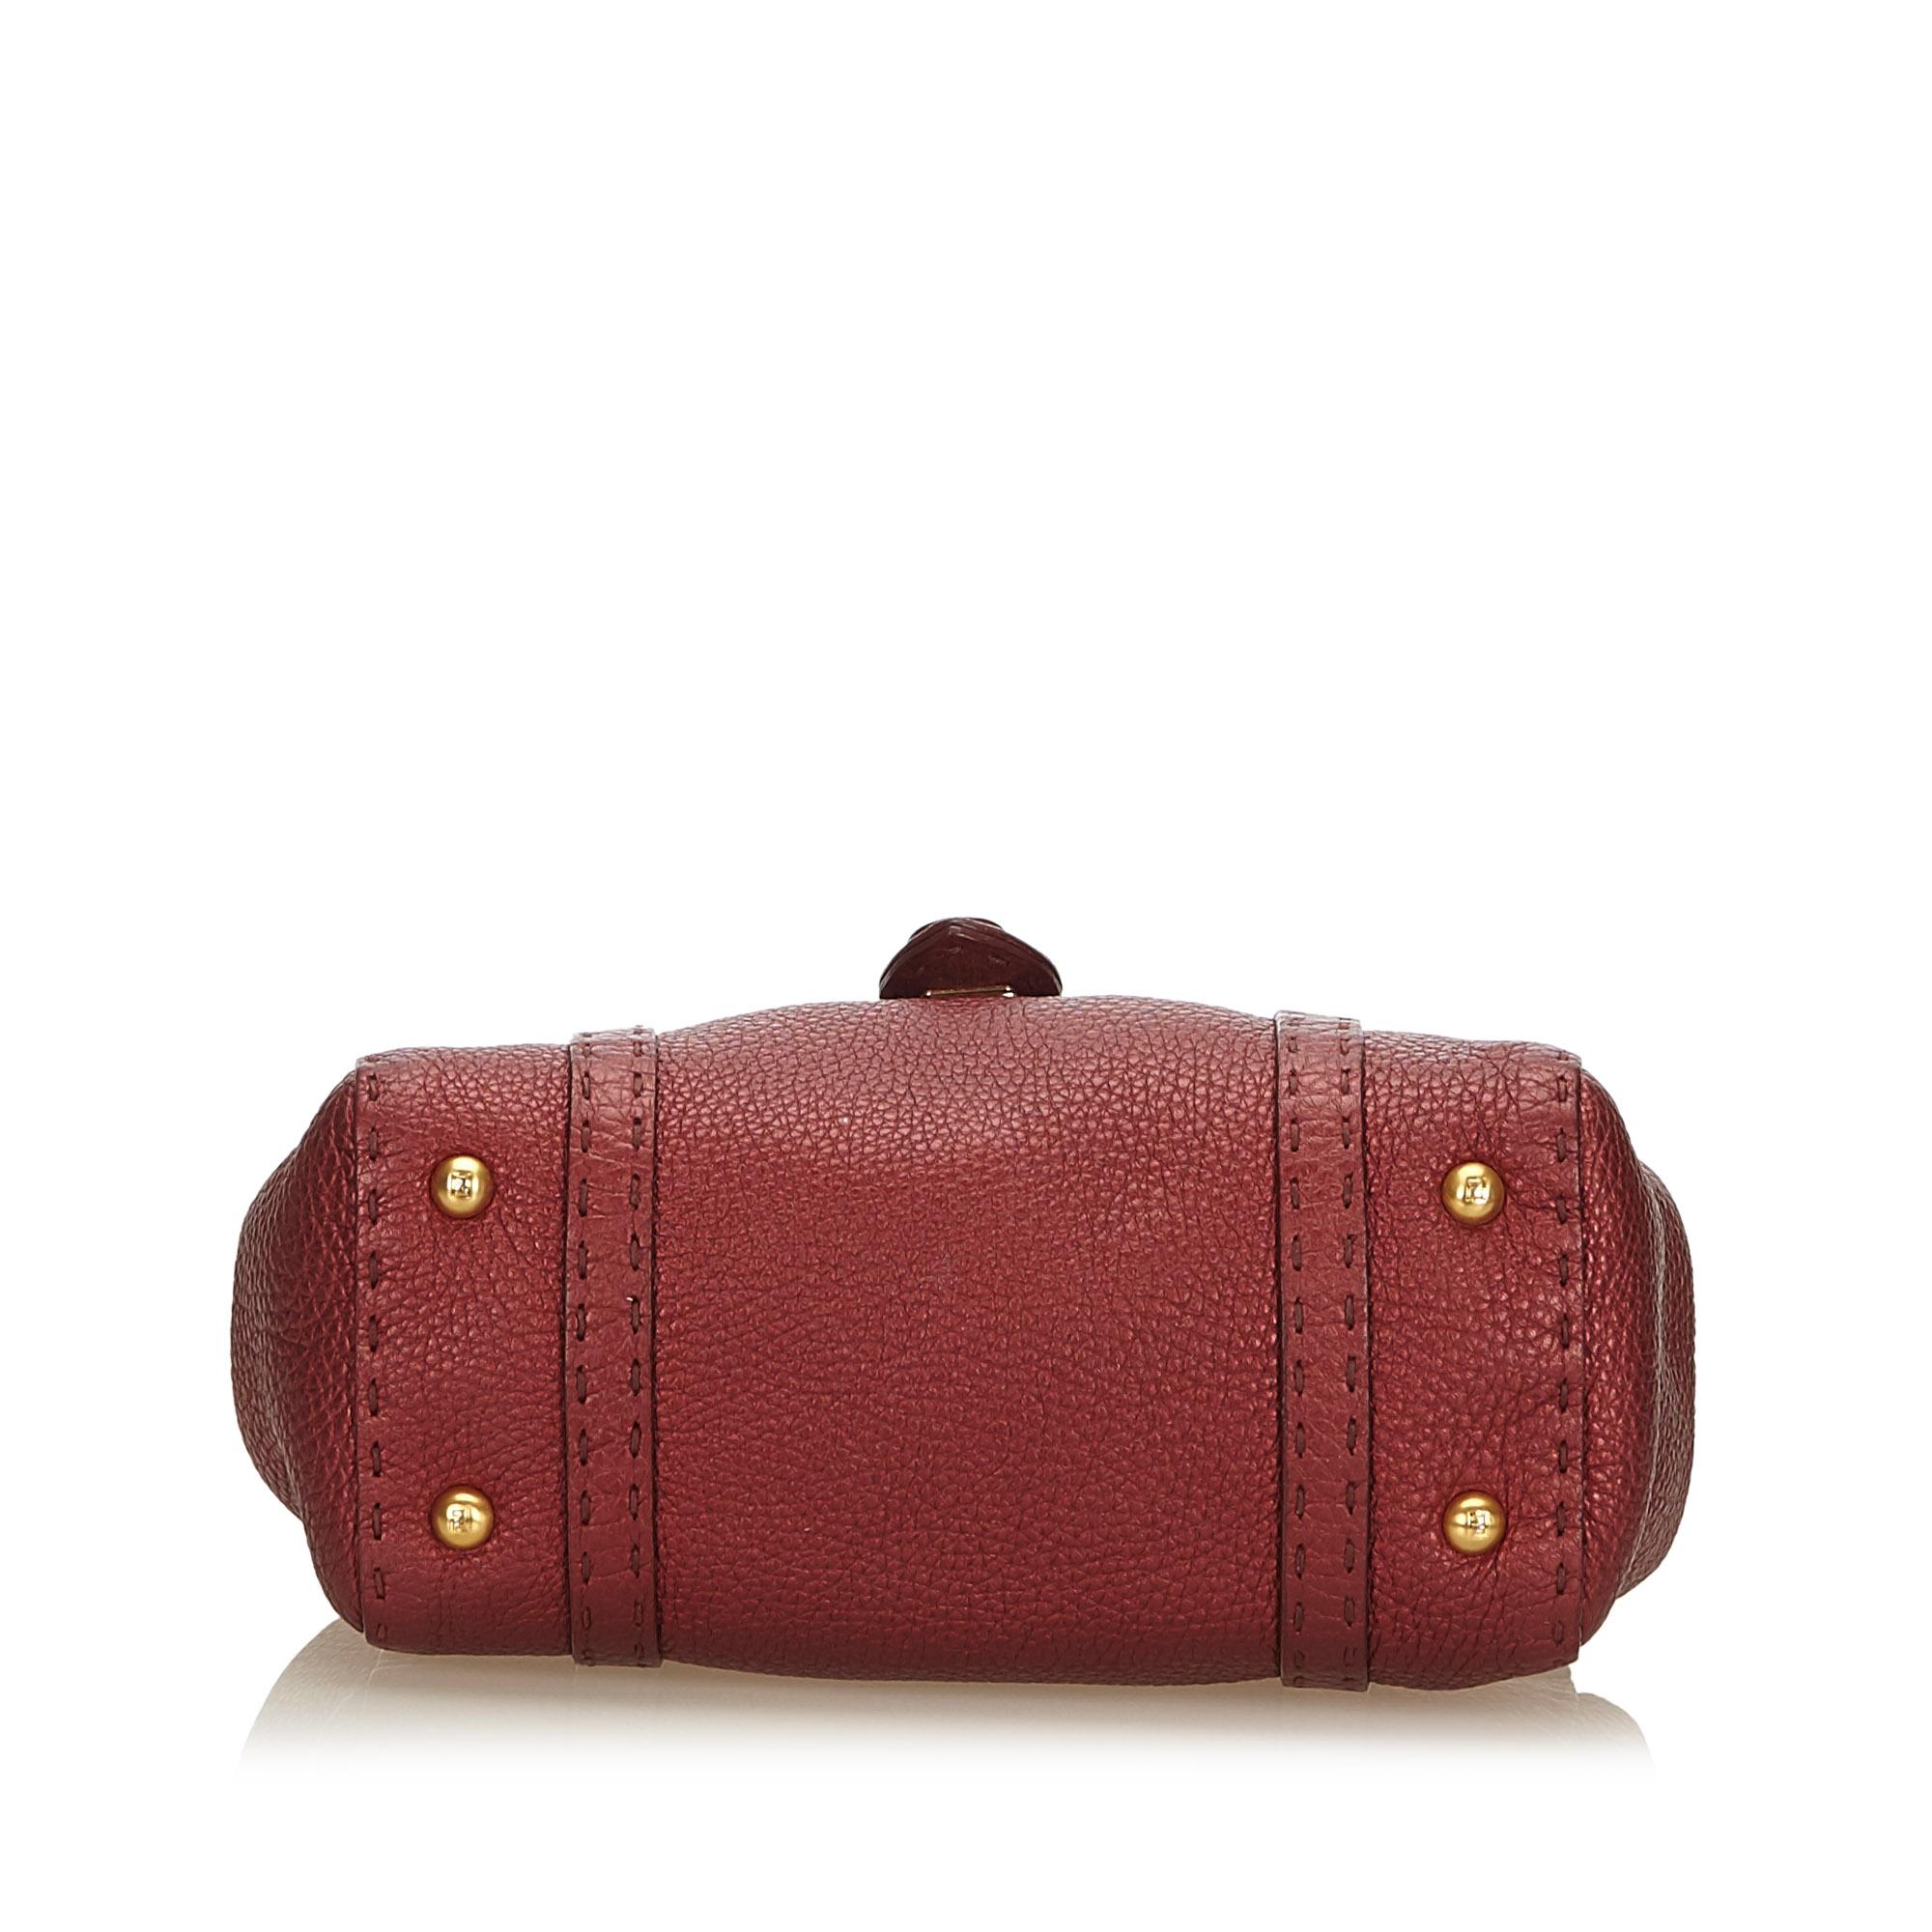 Fendi Red Mini Linda Handbag In Good Condition For Sale In Orlando, FL